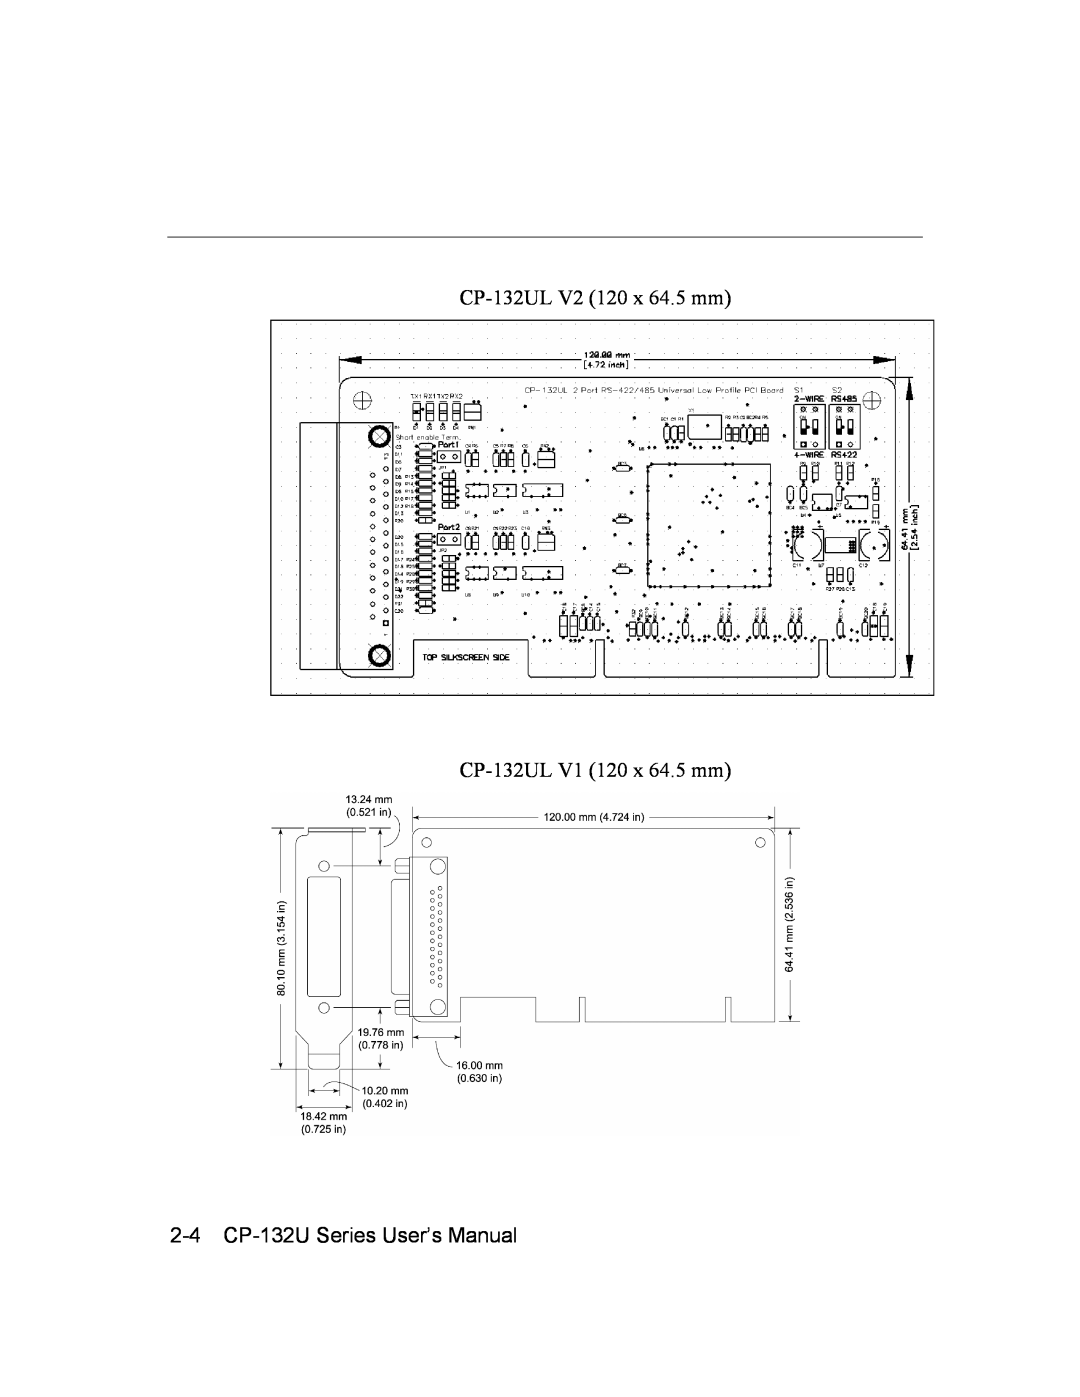 Moxa Technologies user manual CP-132UL V2 120 x 64.5 mm CP-132UL V1 120 x 64.5 mm, 2-4 CP-132U Series User’s Manual 